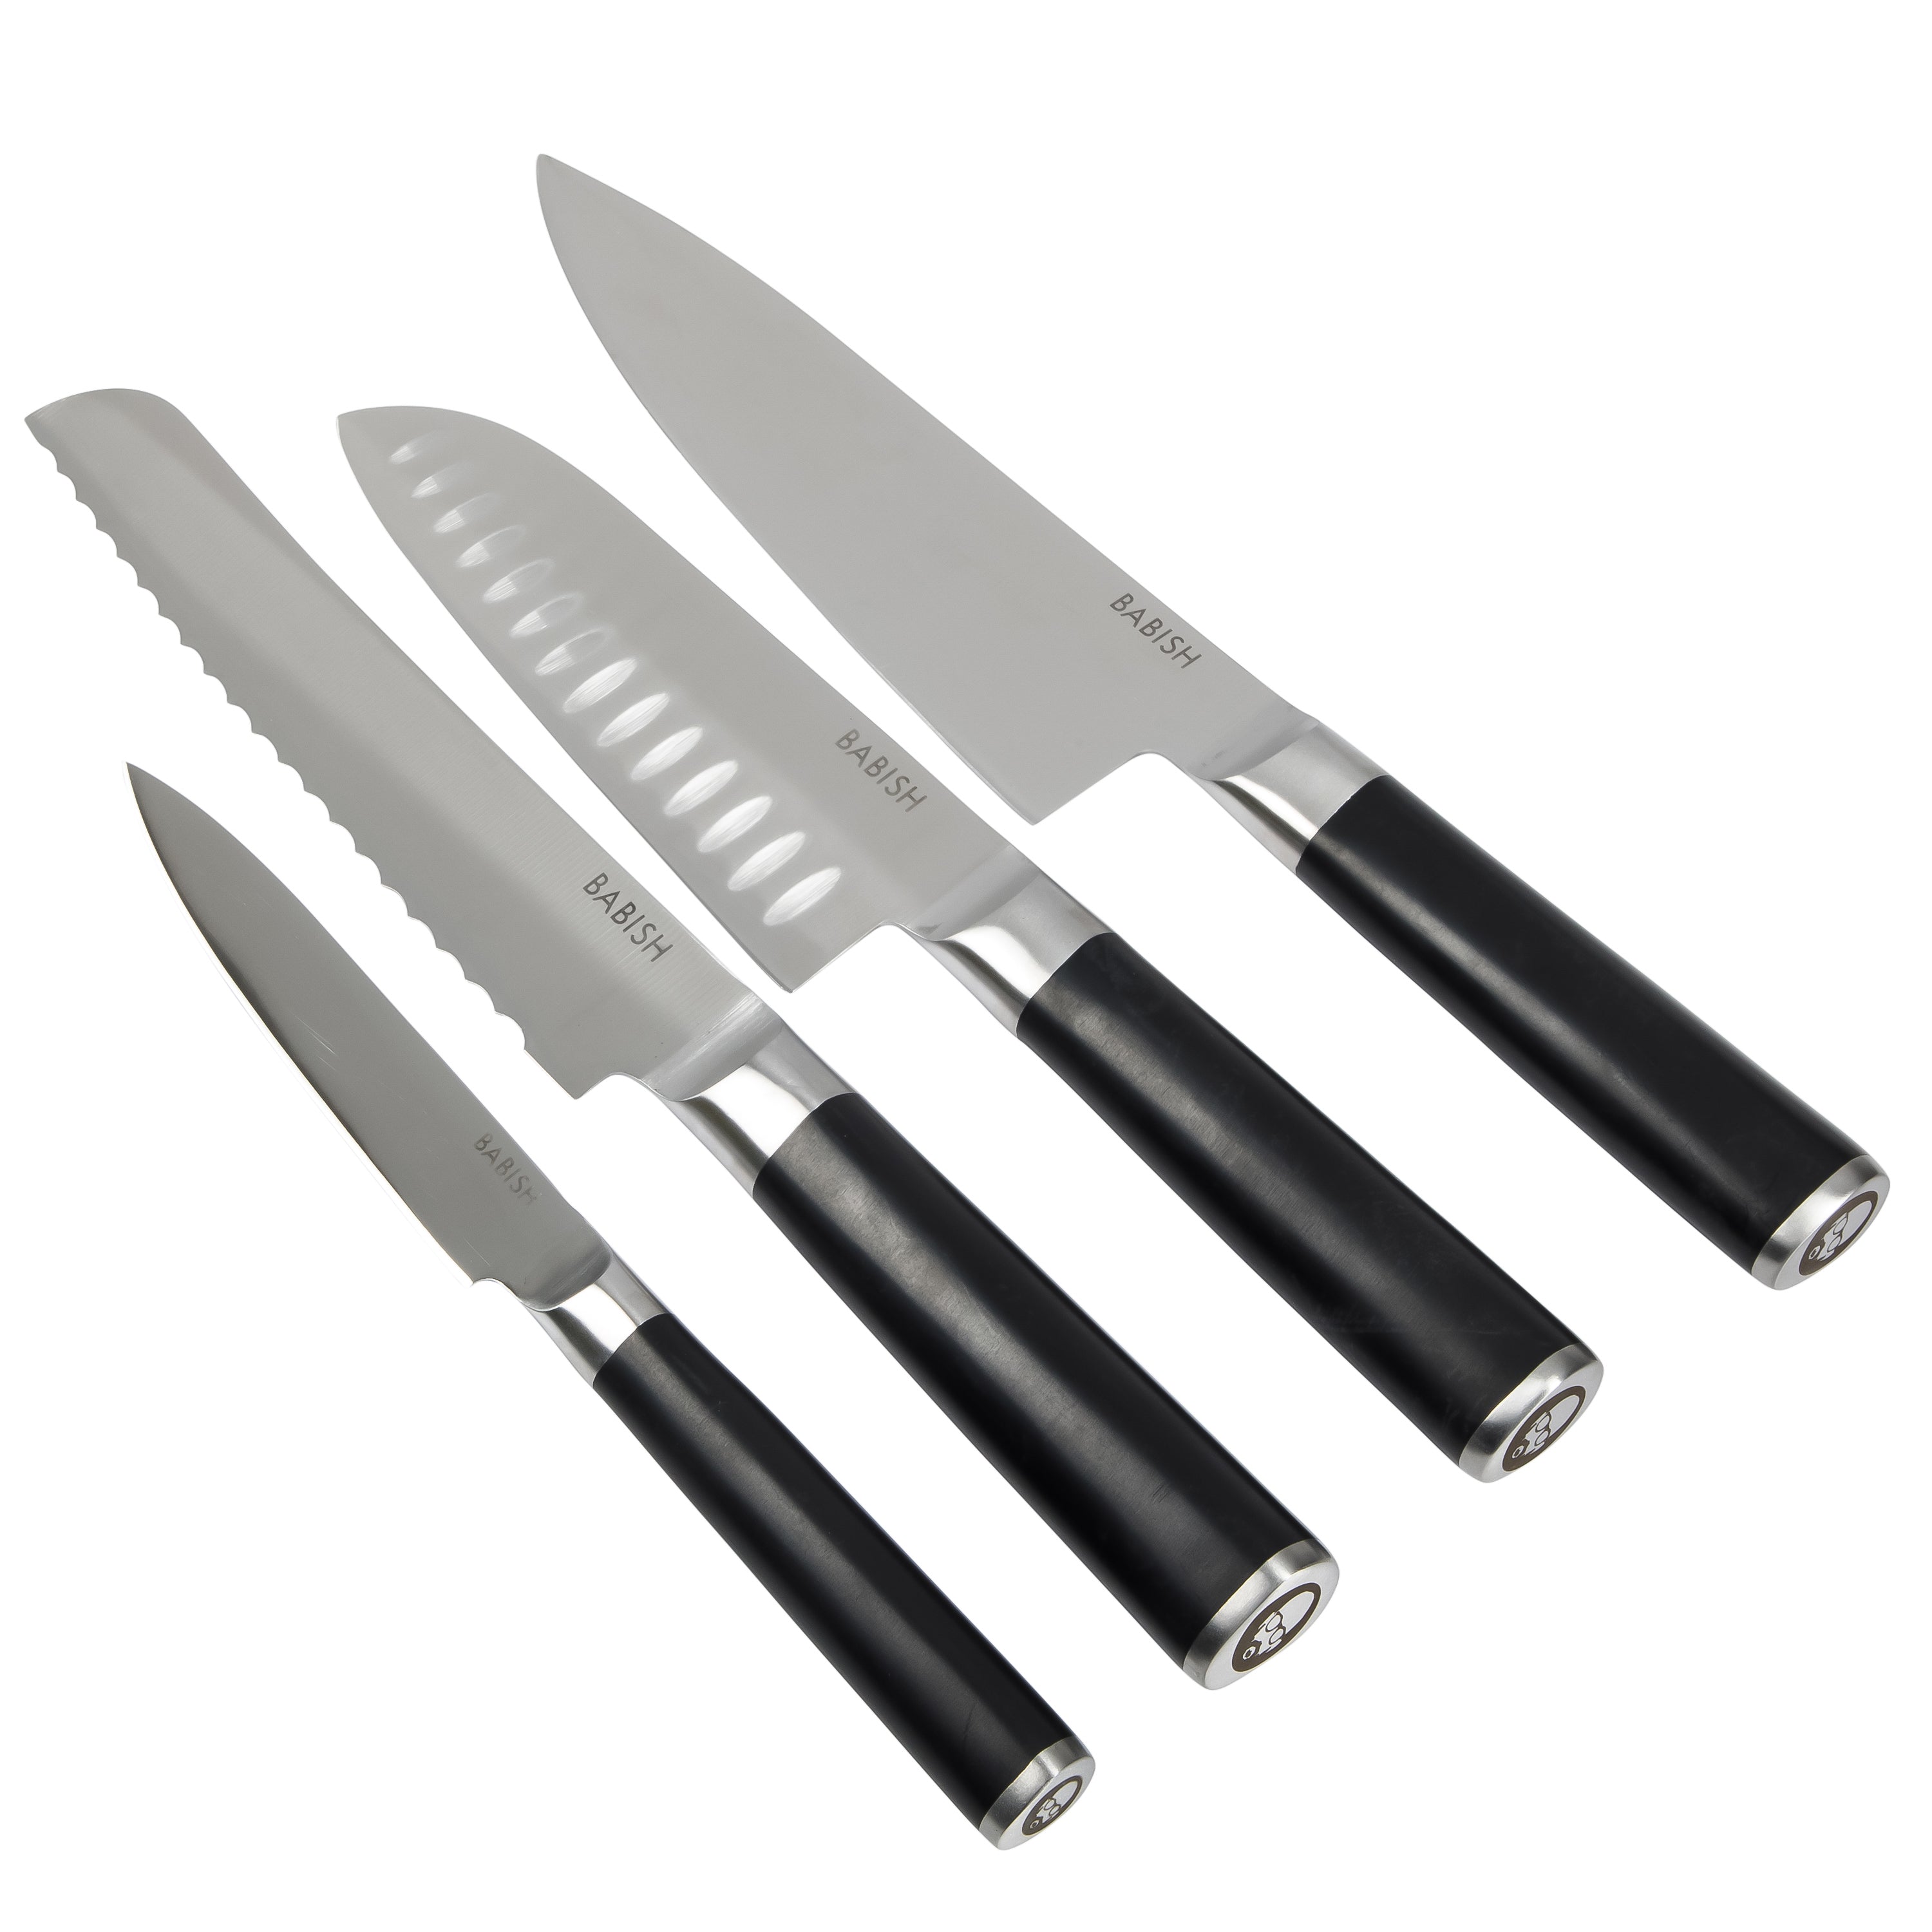 Knife Set, 13-Piece Kitchen Slim Block Stainless Steel Knife Set